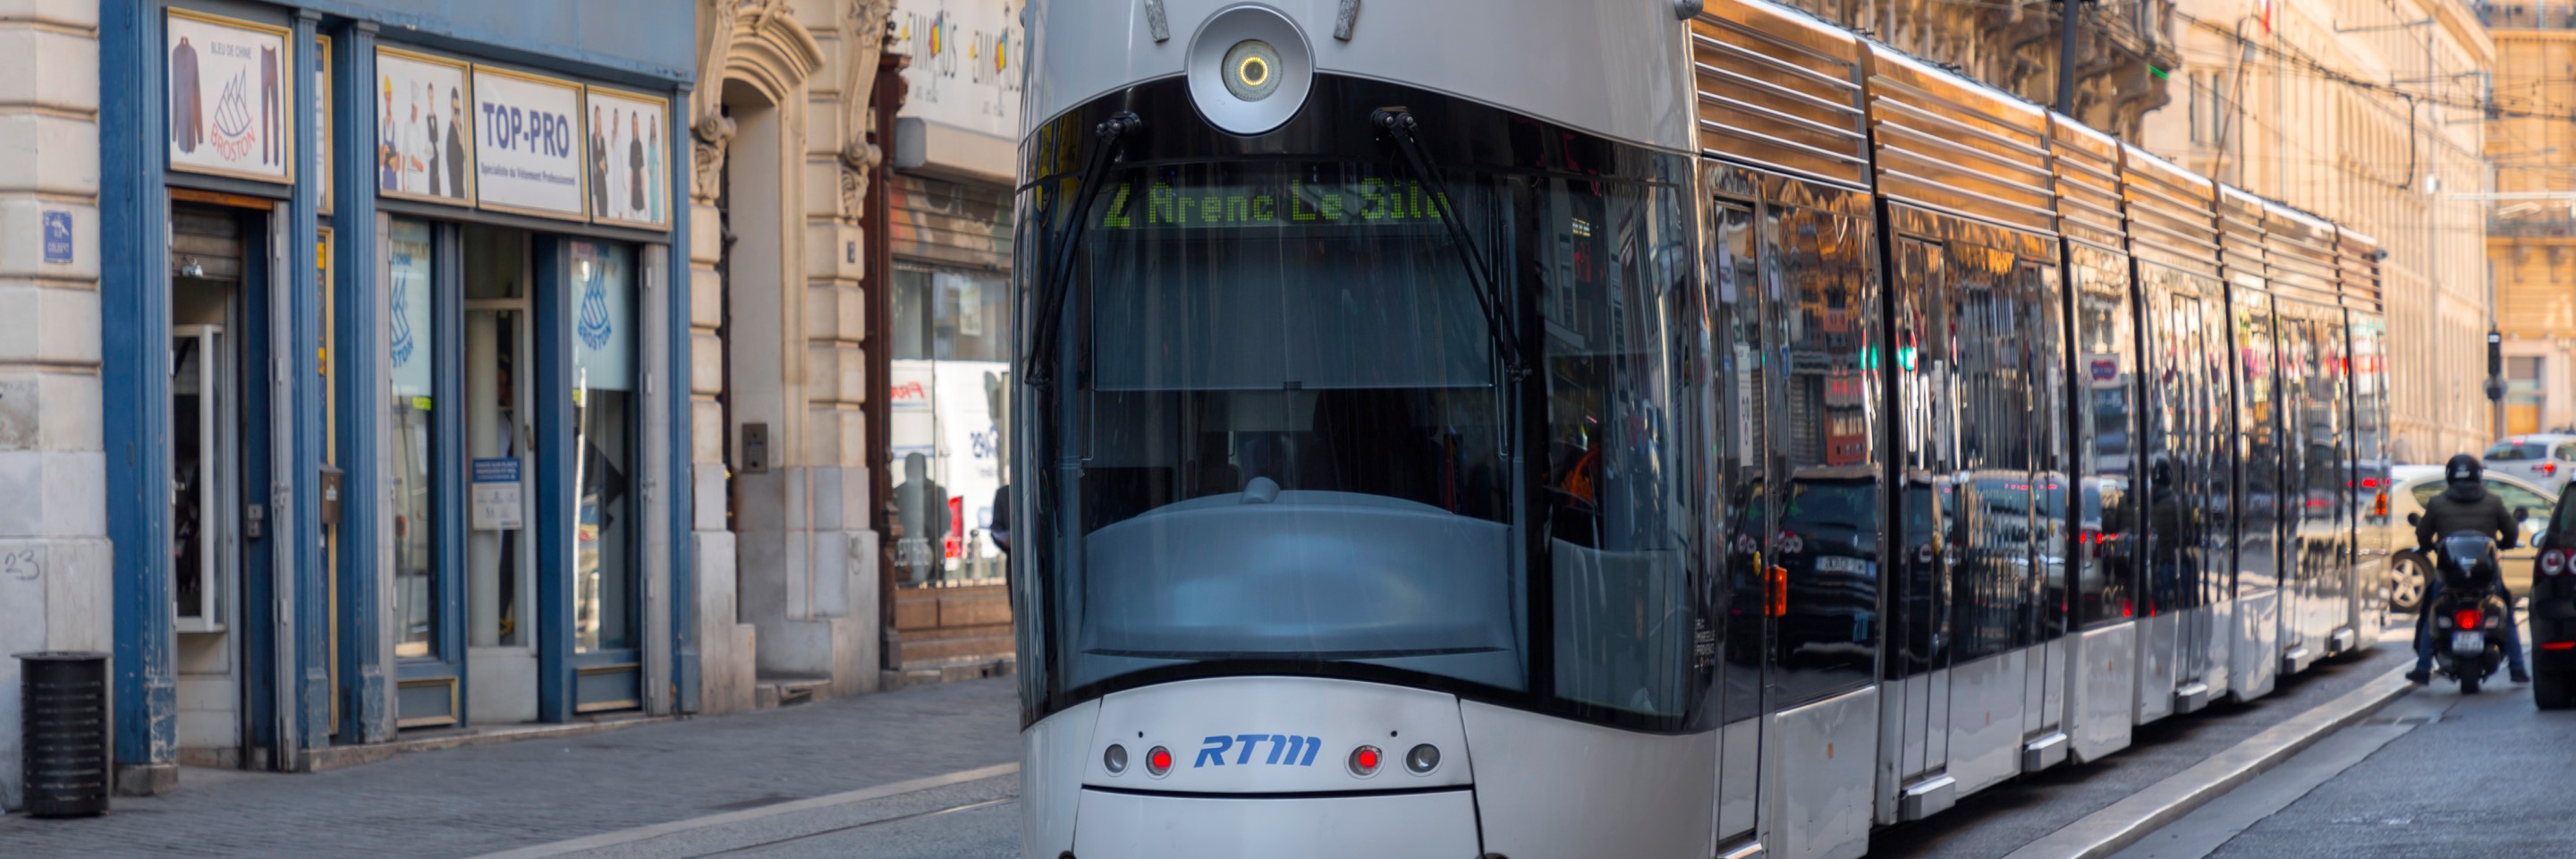 Extension_Tram_T3_Marseille